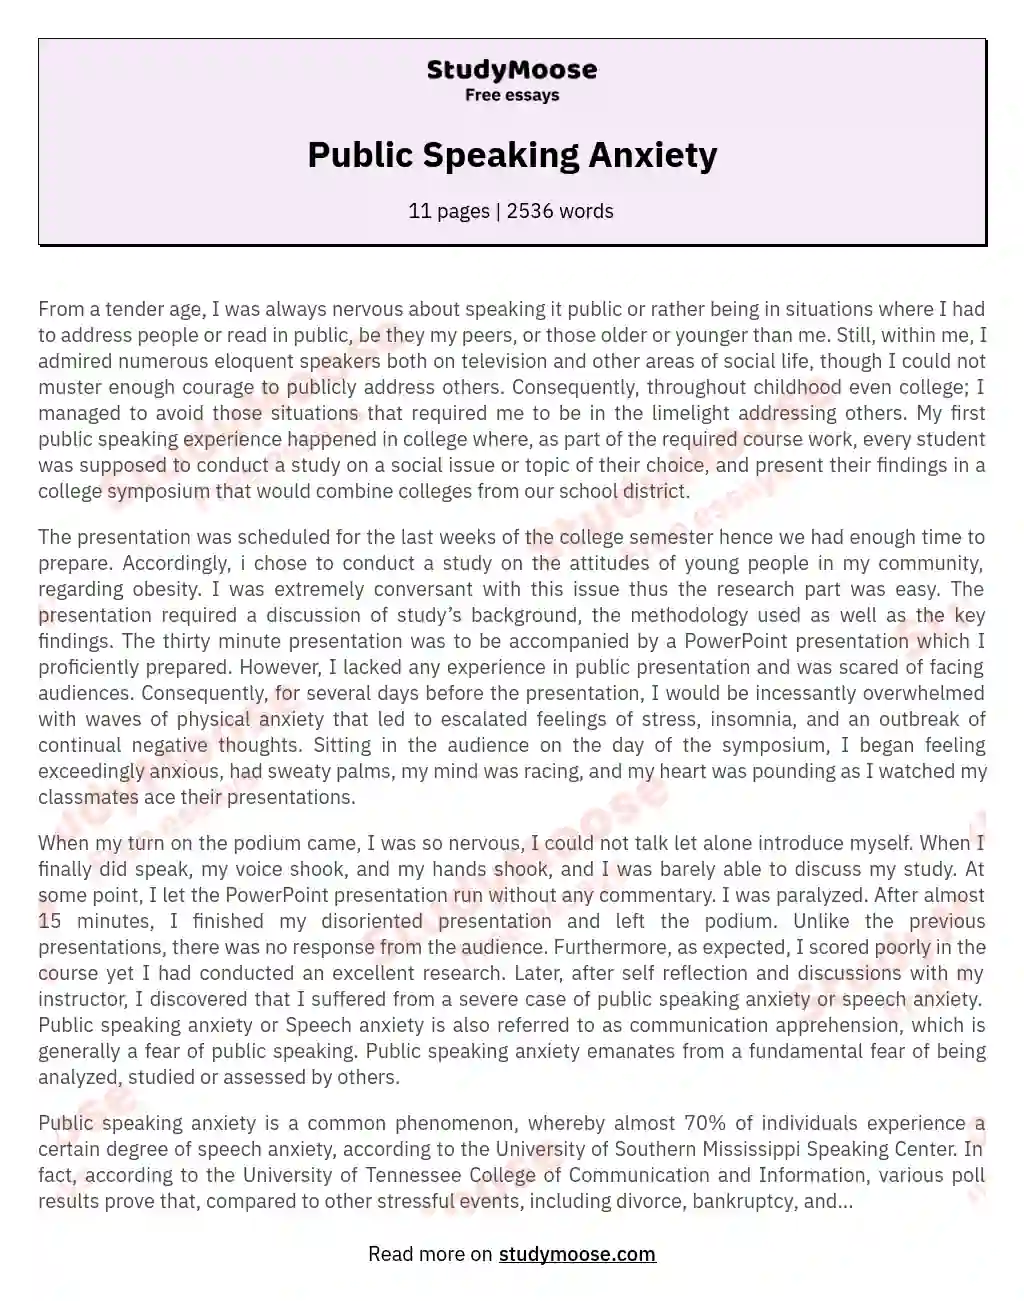 Public Speaking Anxiety essay